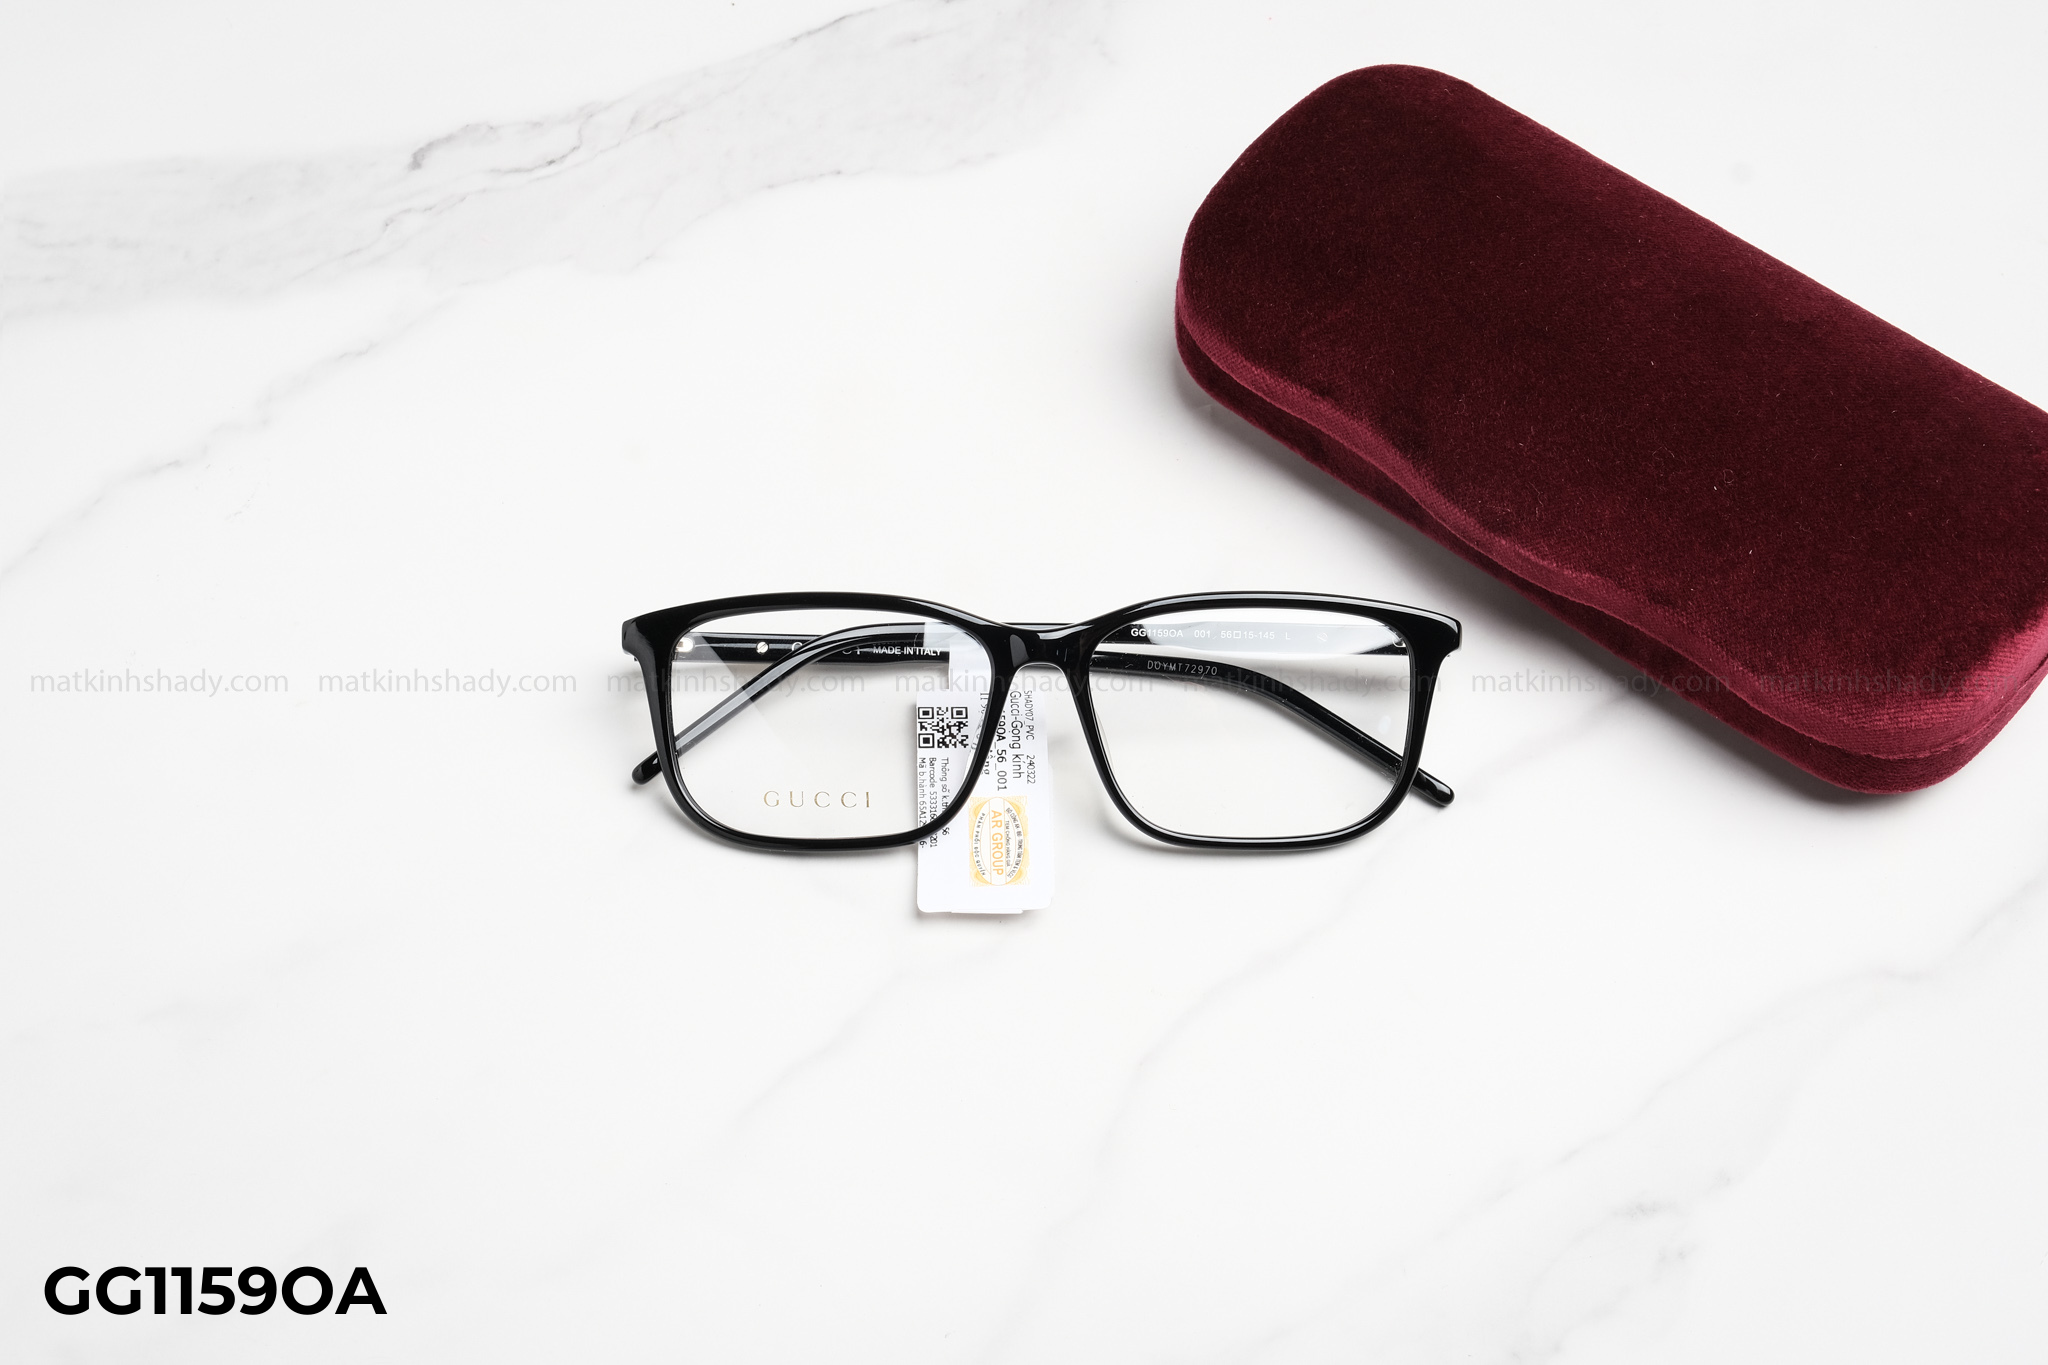  Gucci Eyewear - Glasses - GG1159OA 